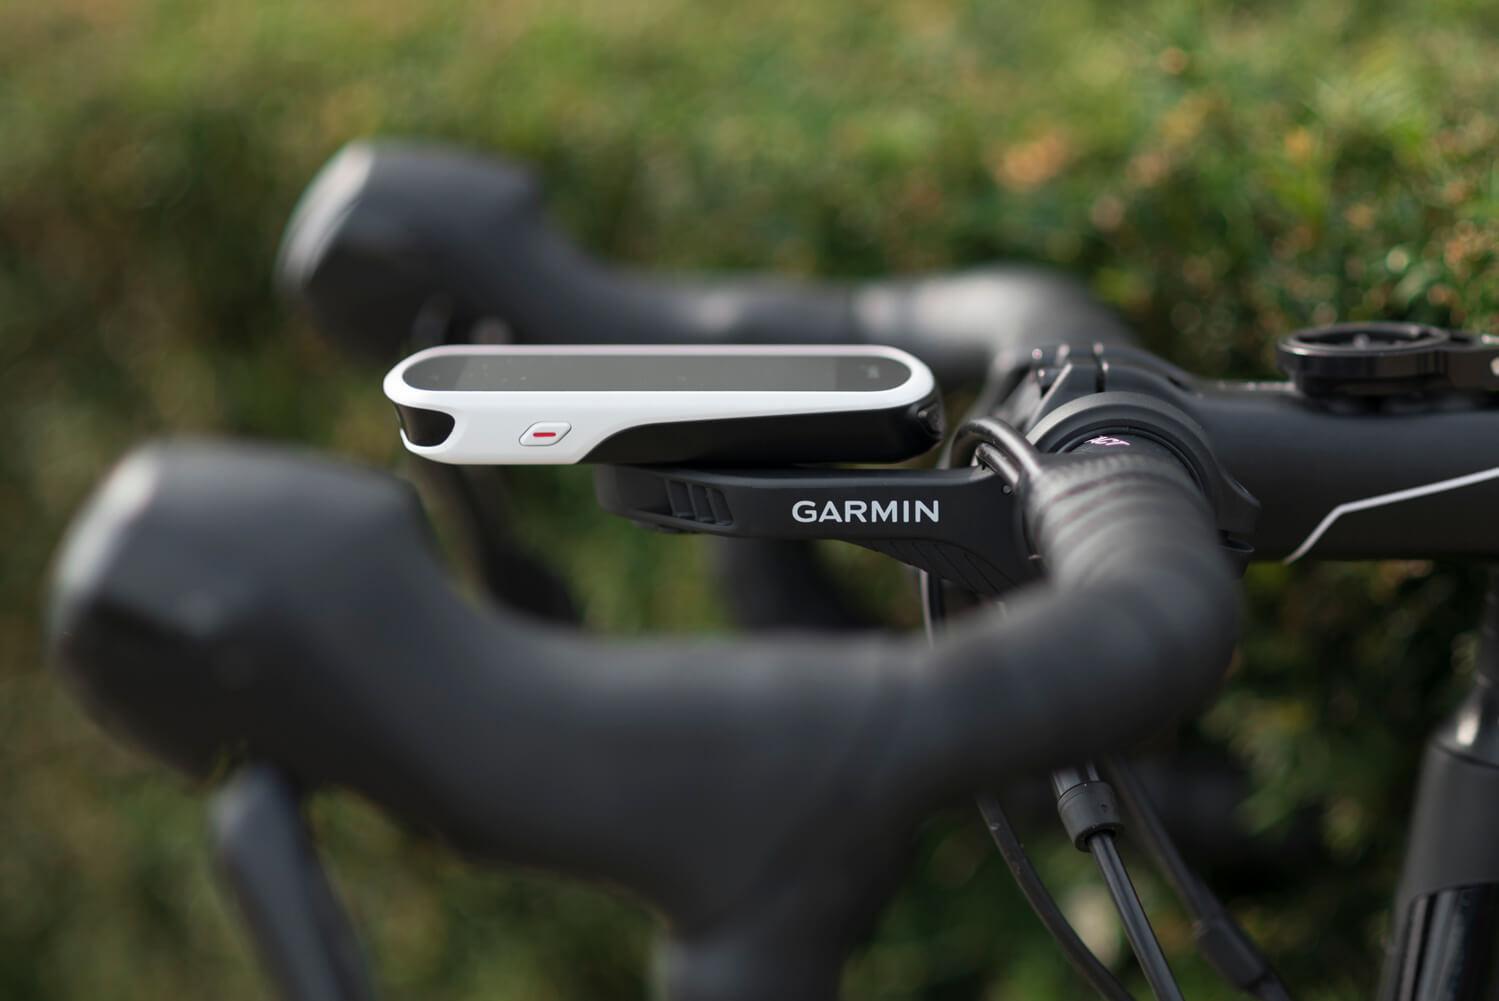 De Garmin In-Flush stuurmount positioneert de Garmin Edge 1030 erg strak en netjes.